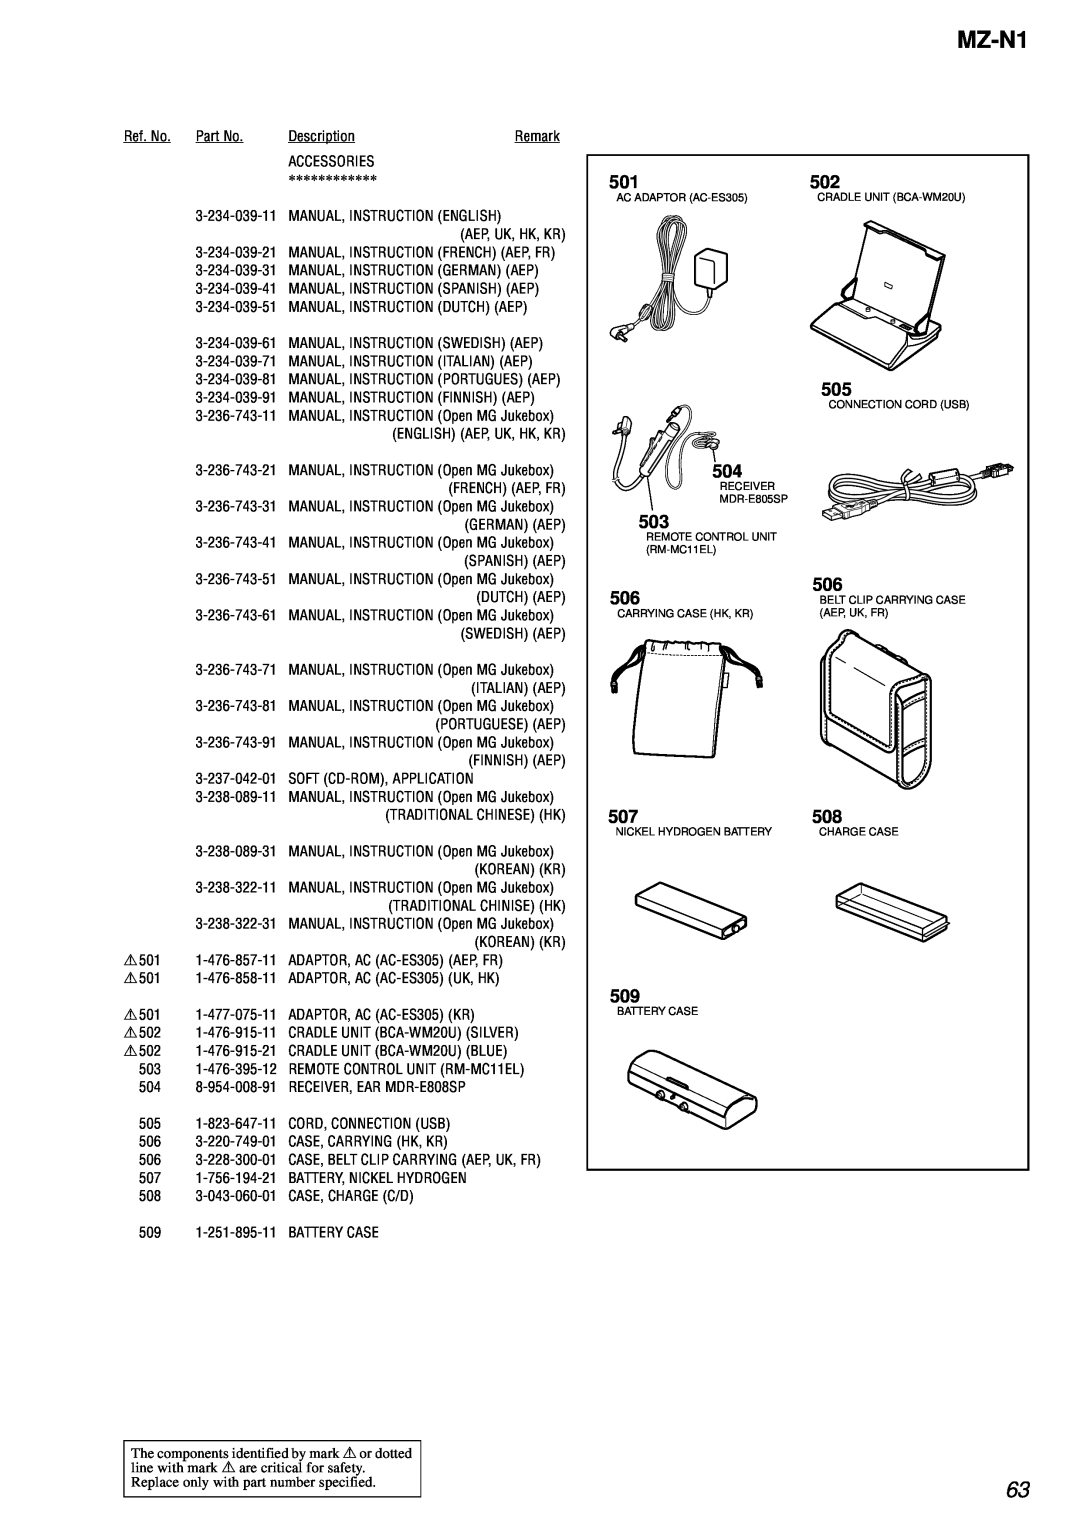 Sony MZ-N1 service manual 